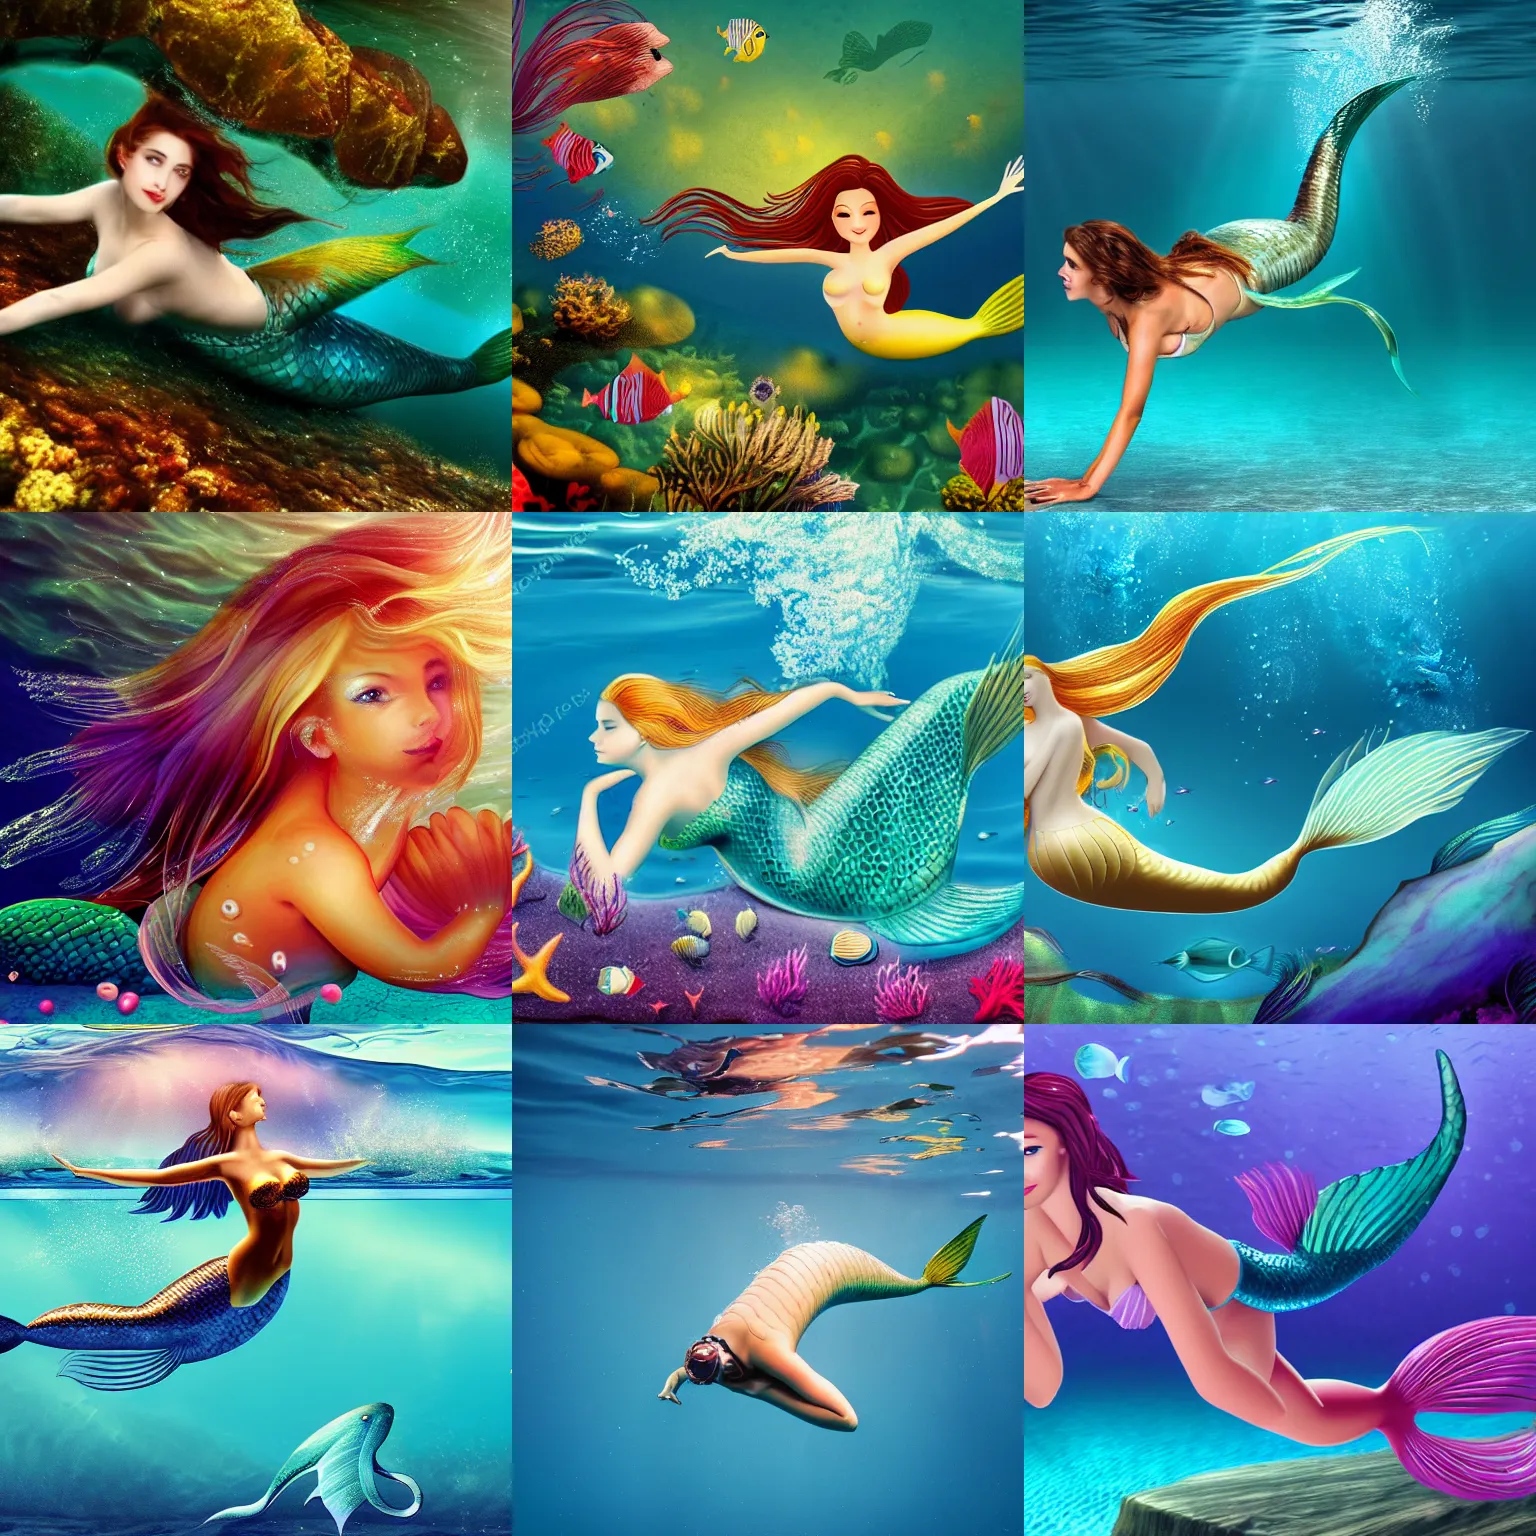 Prompt: beautiful mermaid swimming underwater, 4k